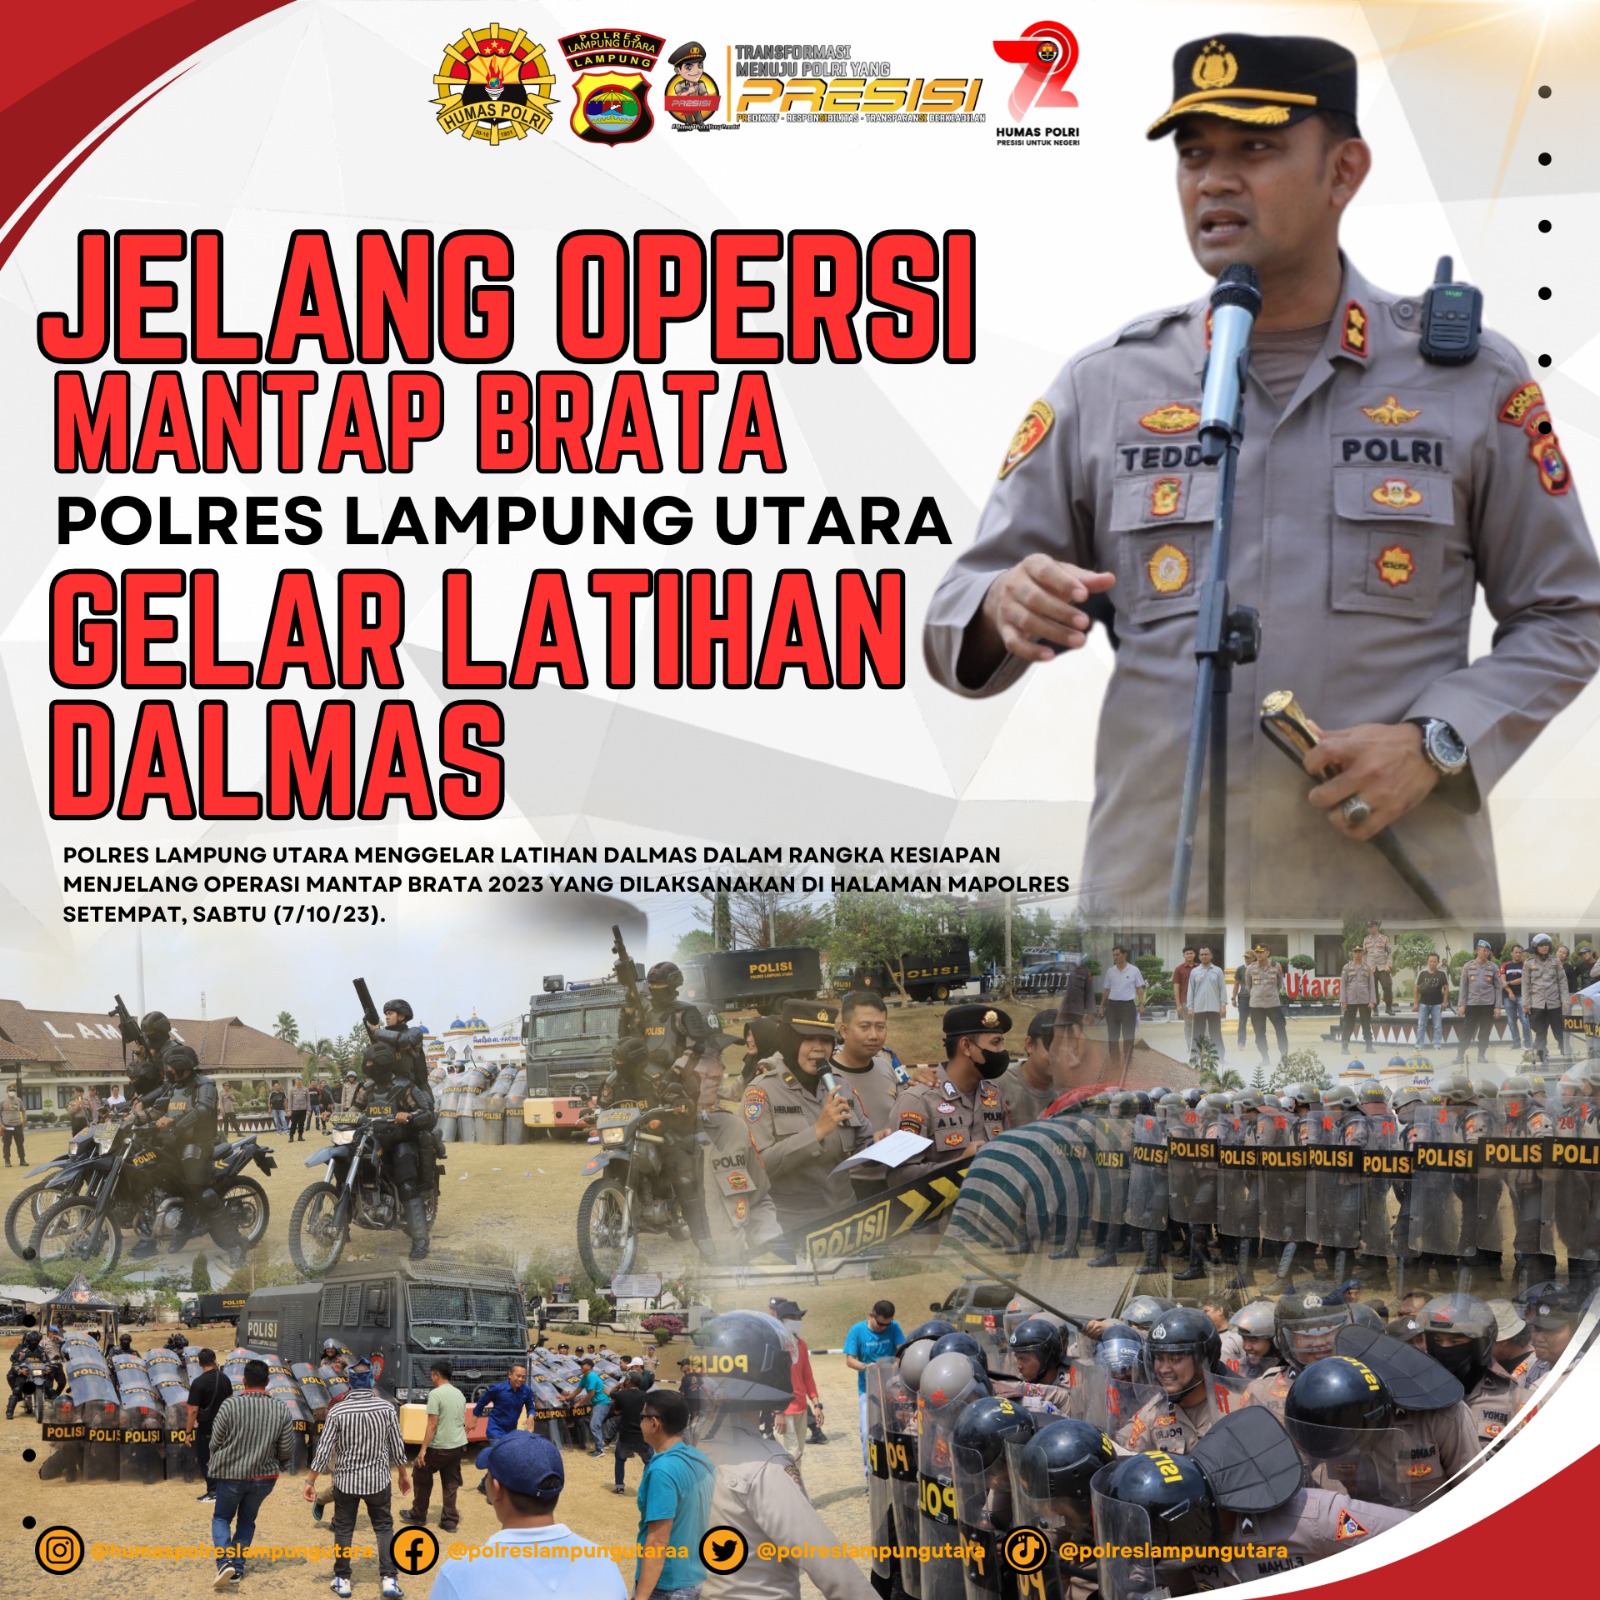 Jelang Operasi Mantap Brata 2023, Polres Lampung Utara Gelar Latihan Dalmas